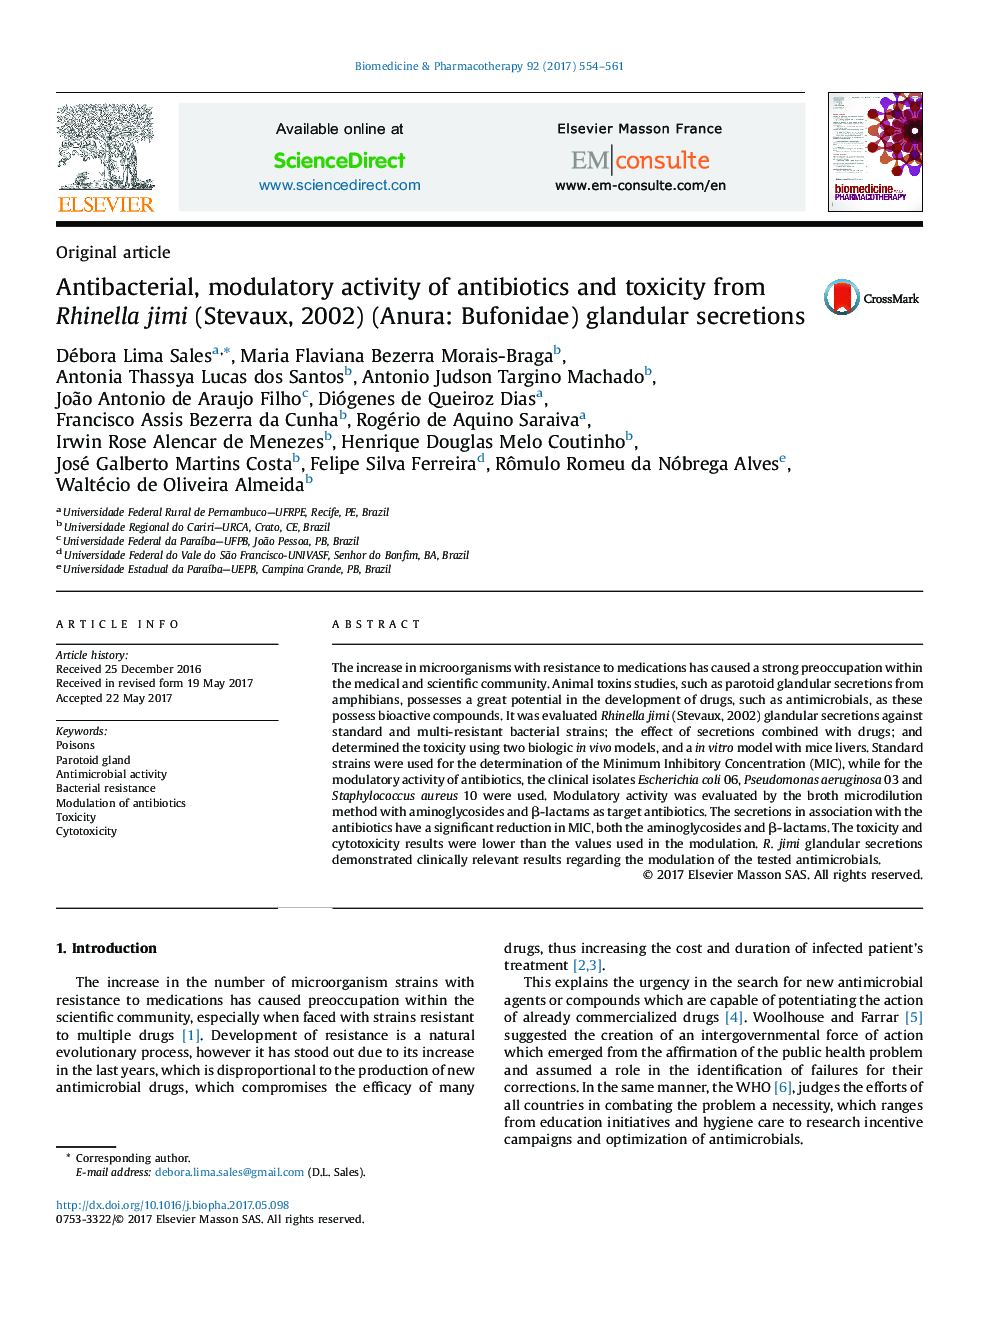 Antibacterial, modulatory activity of antibiotics and toxicity from Rhinella jimi (Stevaux, 2002) (Anura: Bufonidae) glandular secretions